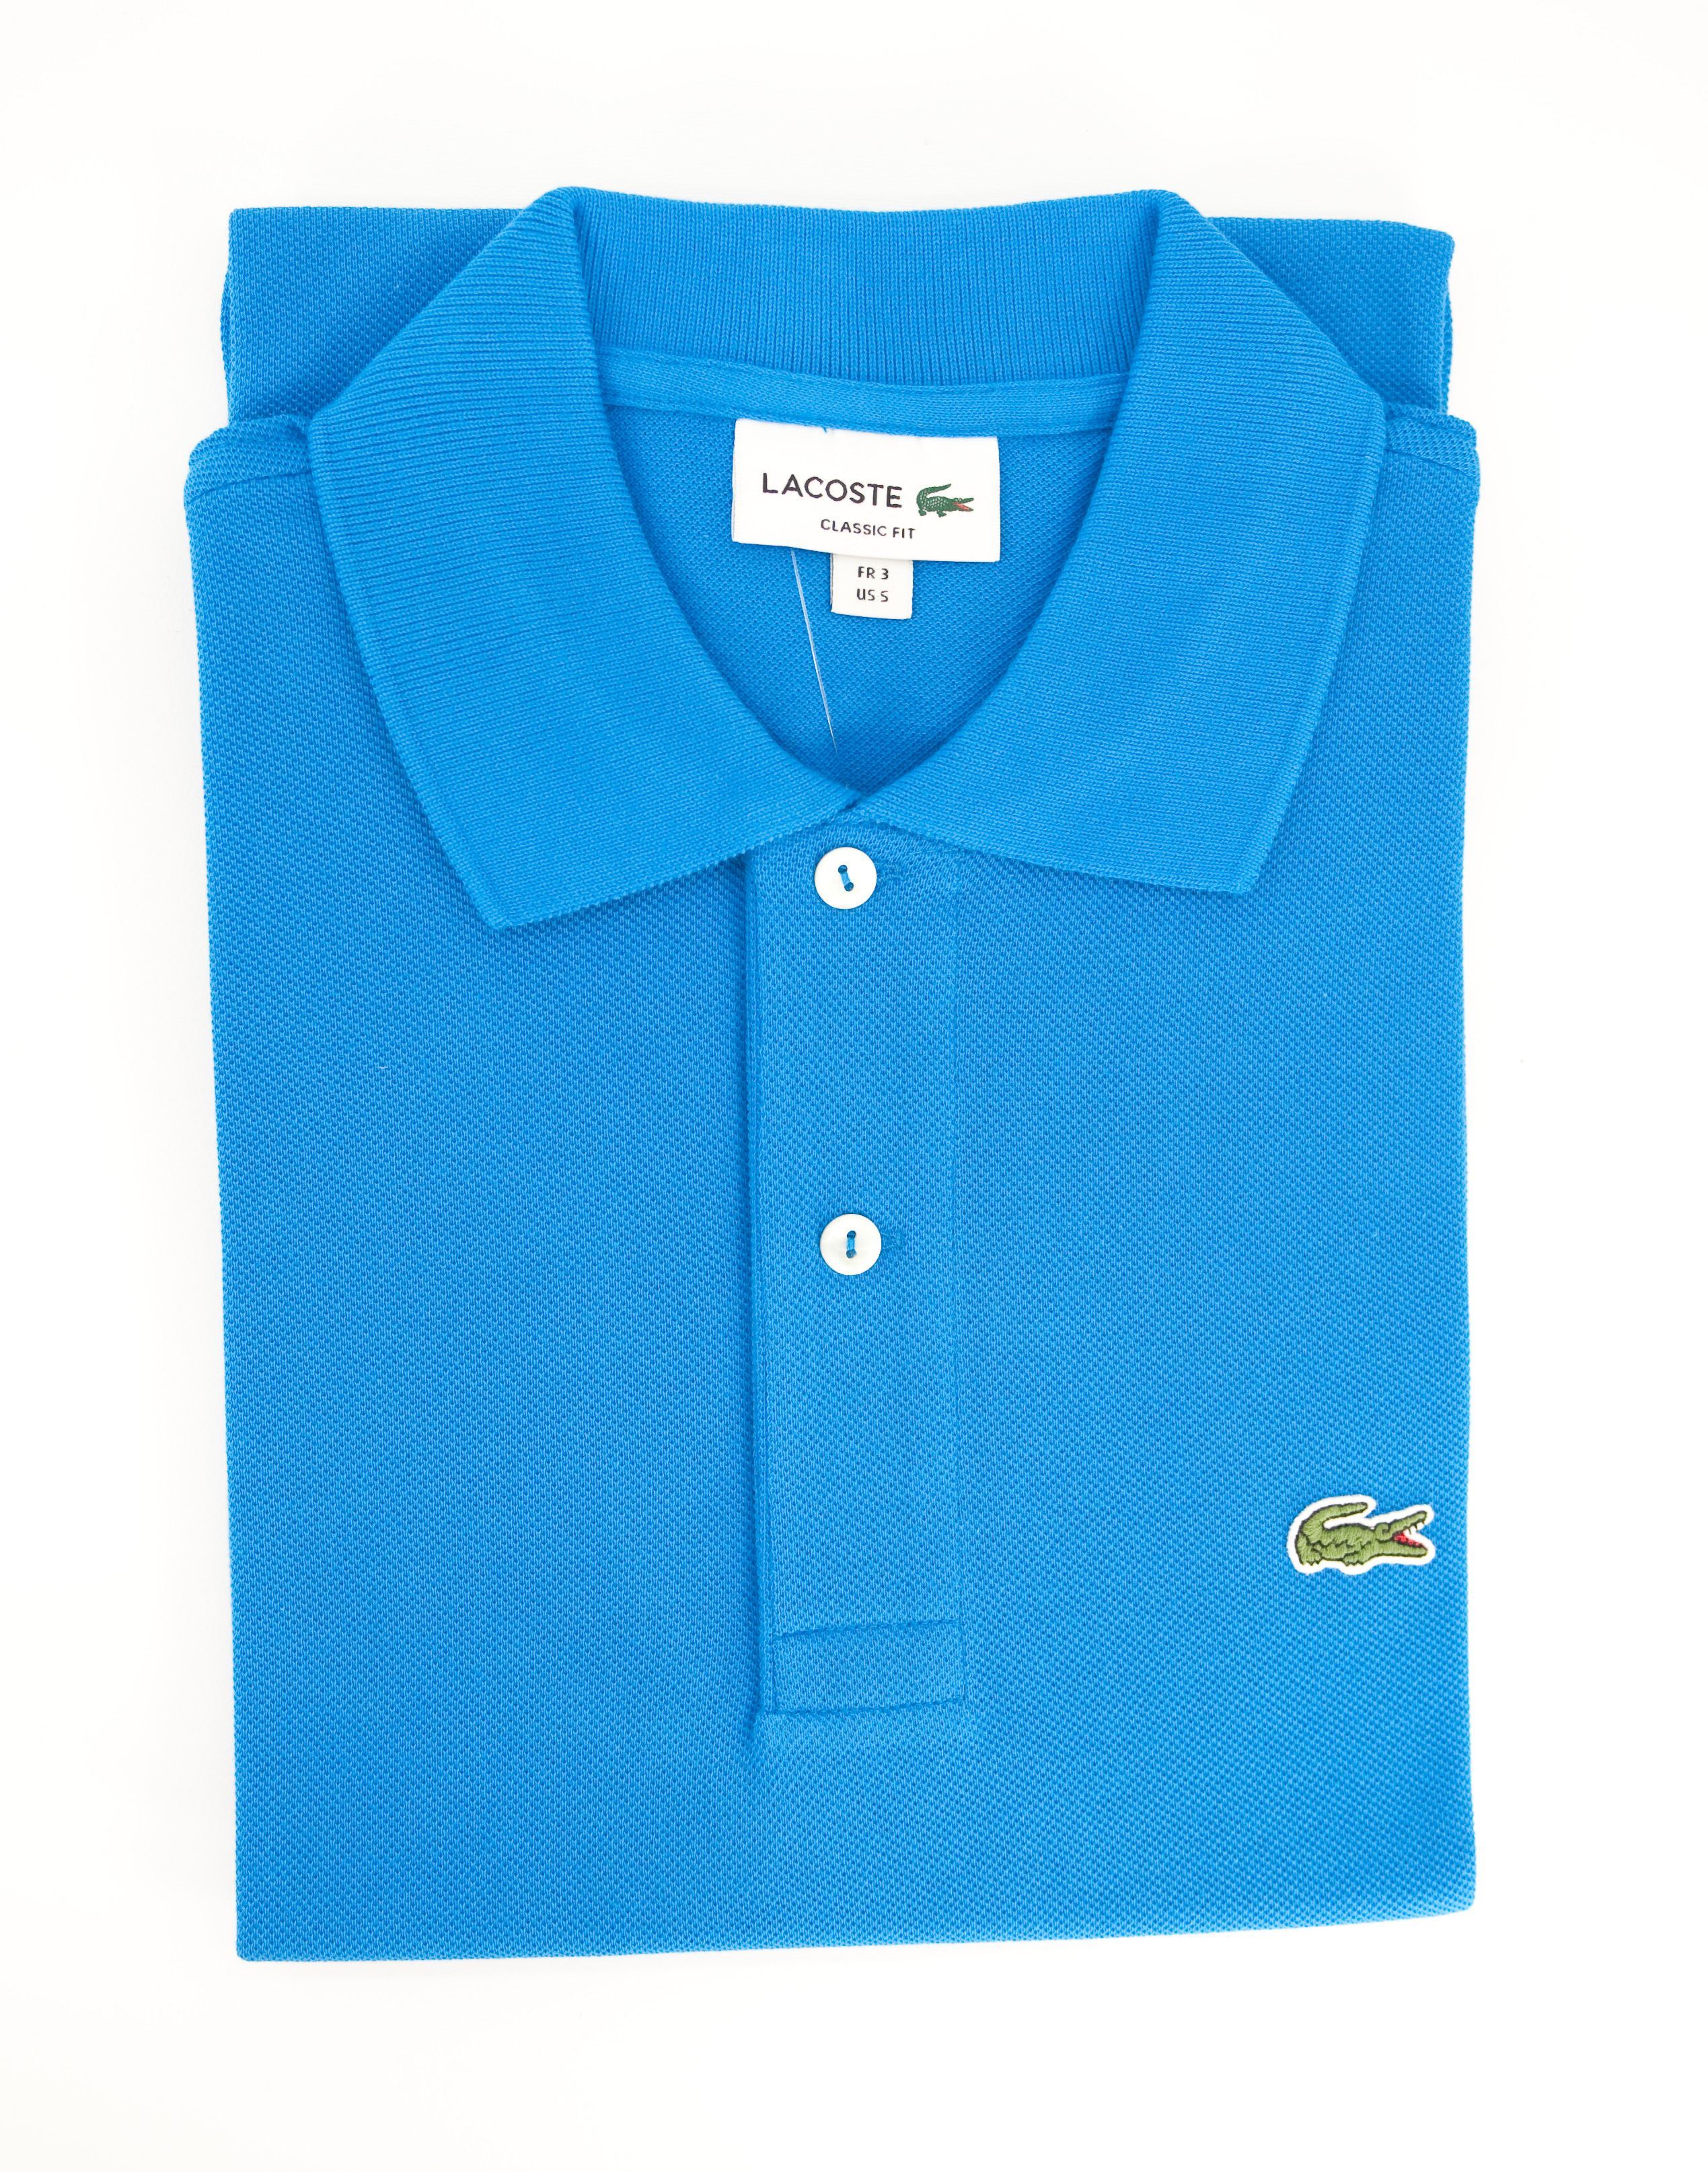 light blue lacoste polo shirt